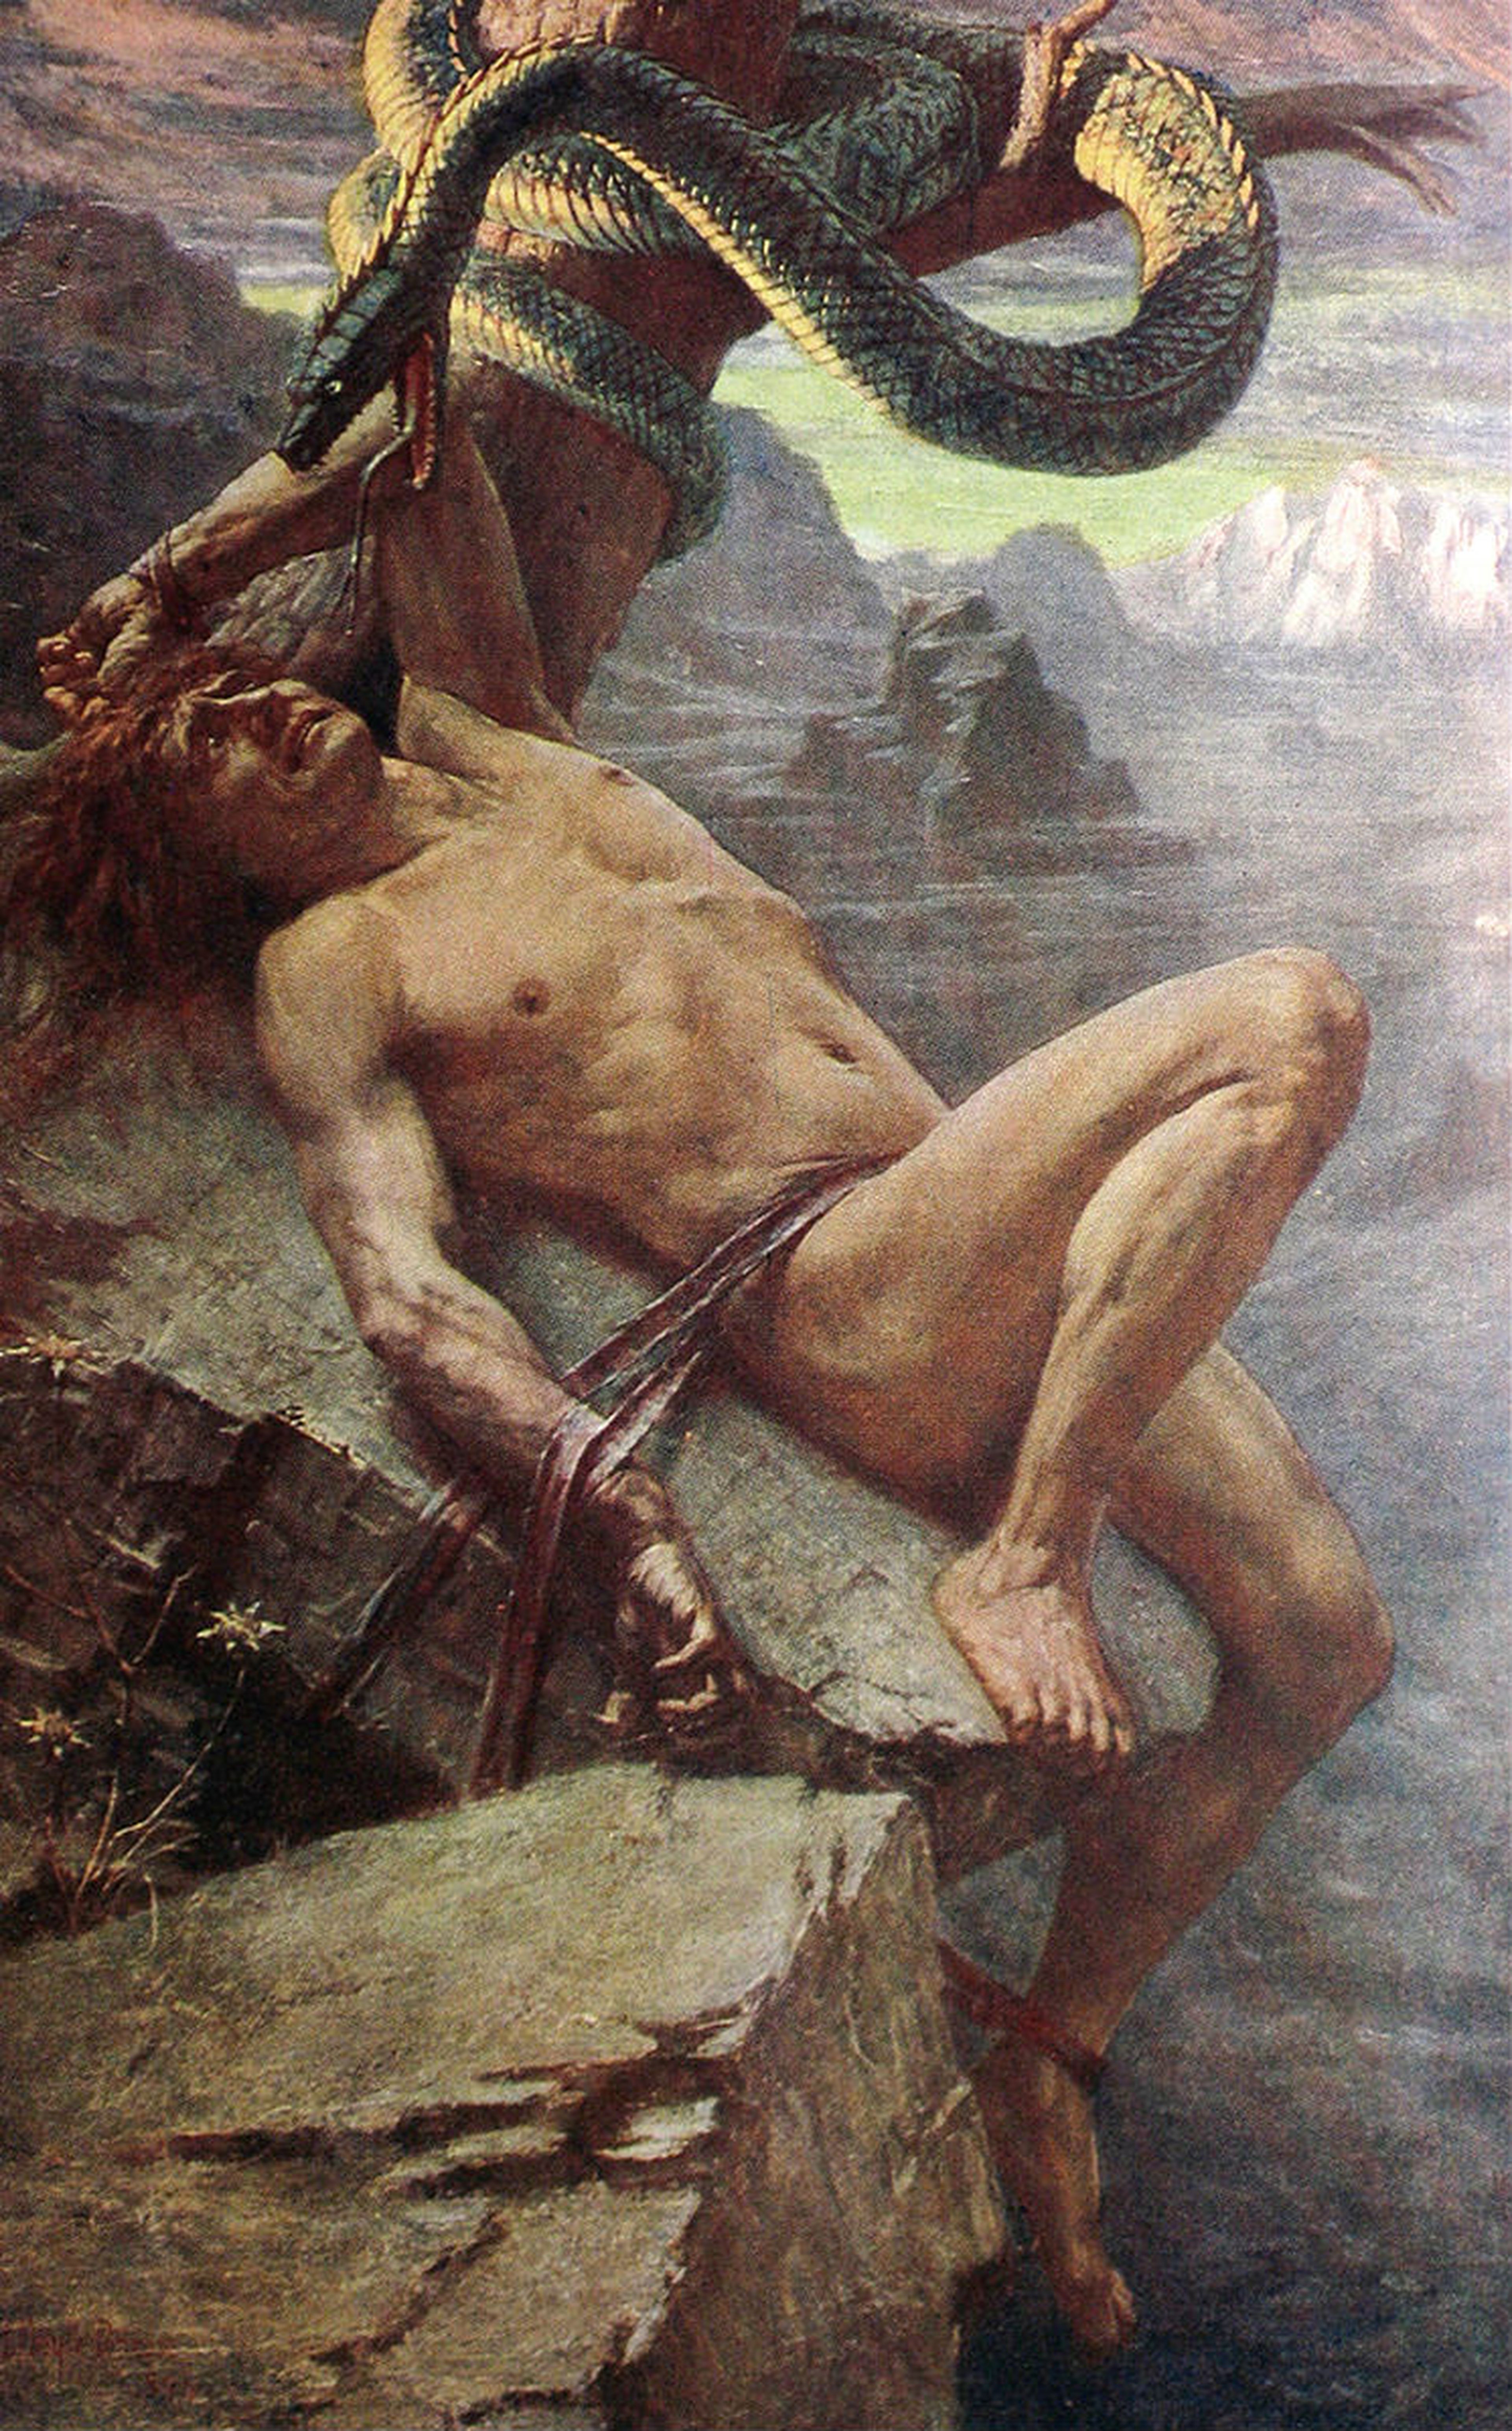 "El Cástigo de Loki" por el artista James Doyle Penrose, en el libro "Mitos y Leyendas Teutonas" de Donald A. Mackenzie.